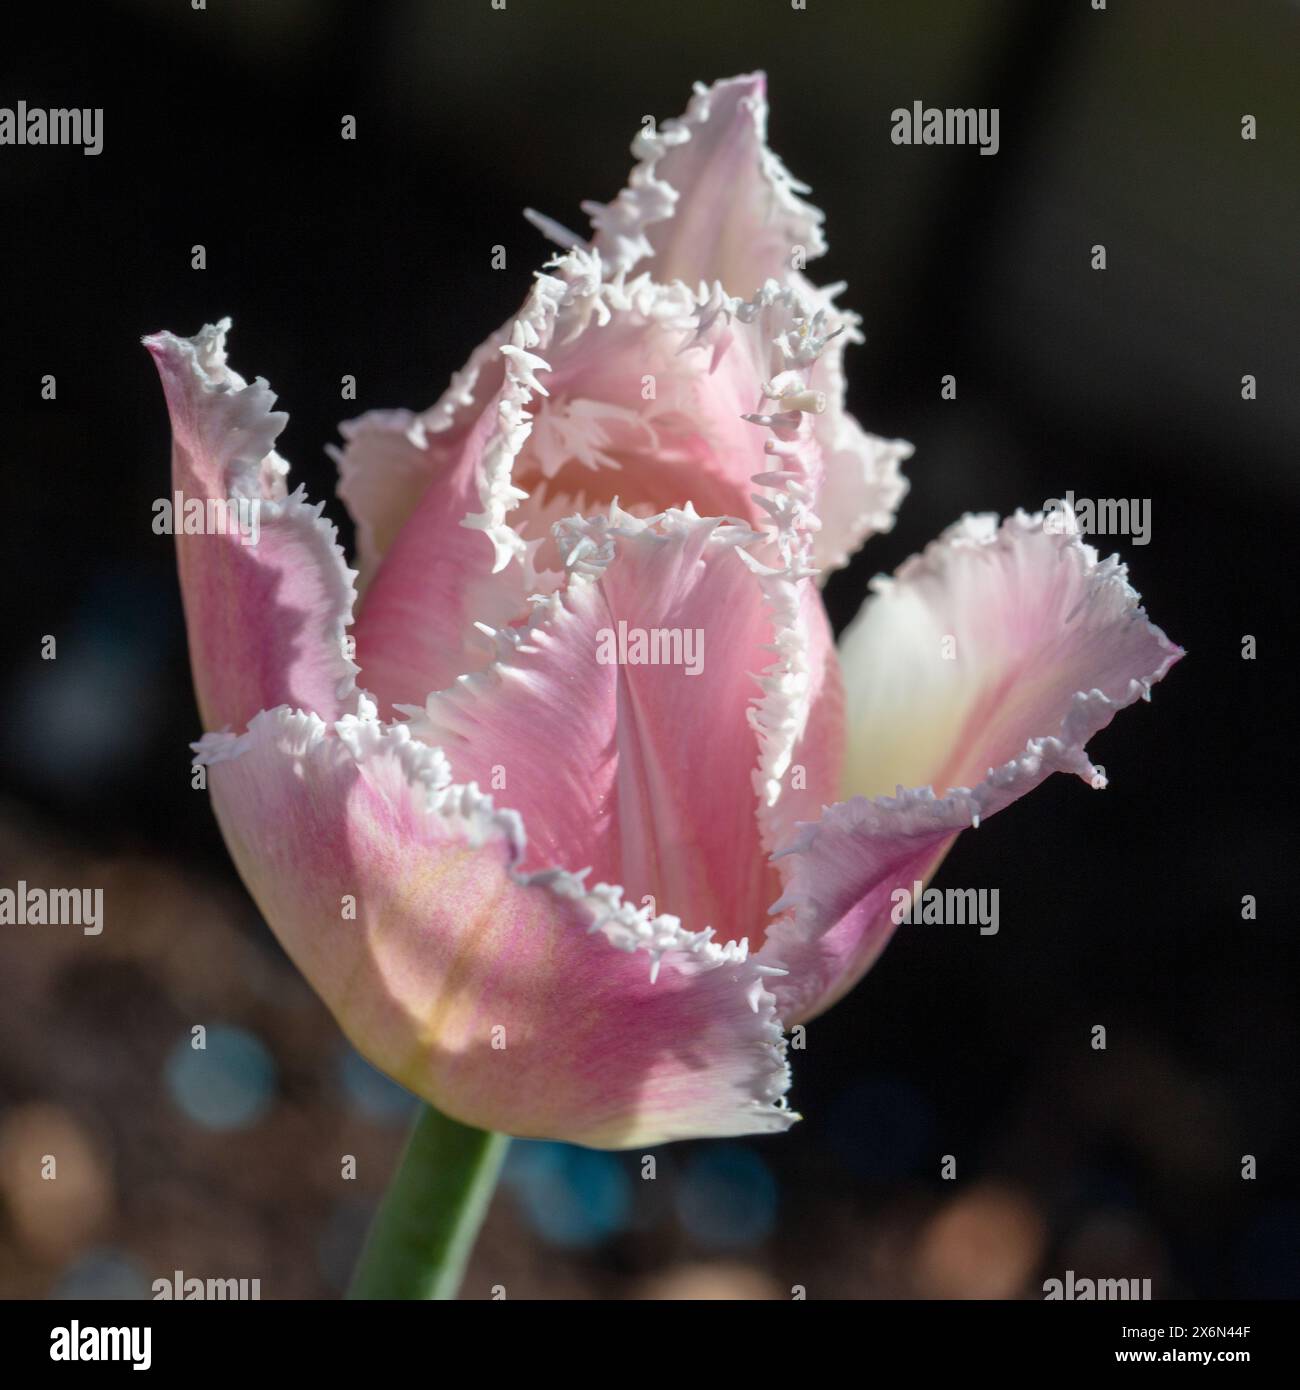 „Dallas“-Franzose Tulip, Franstulpan (Tulipa gesneriana) Stockfoto